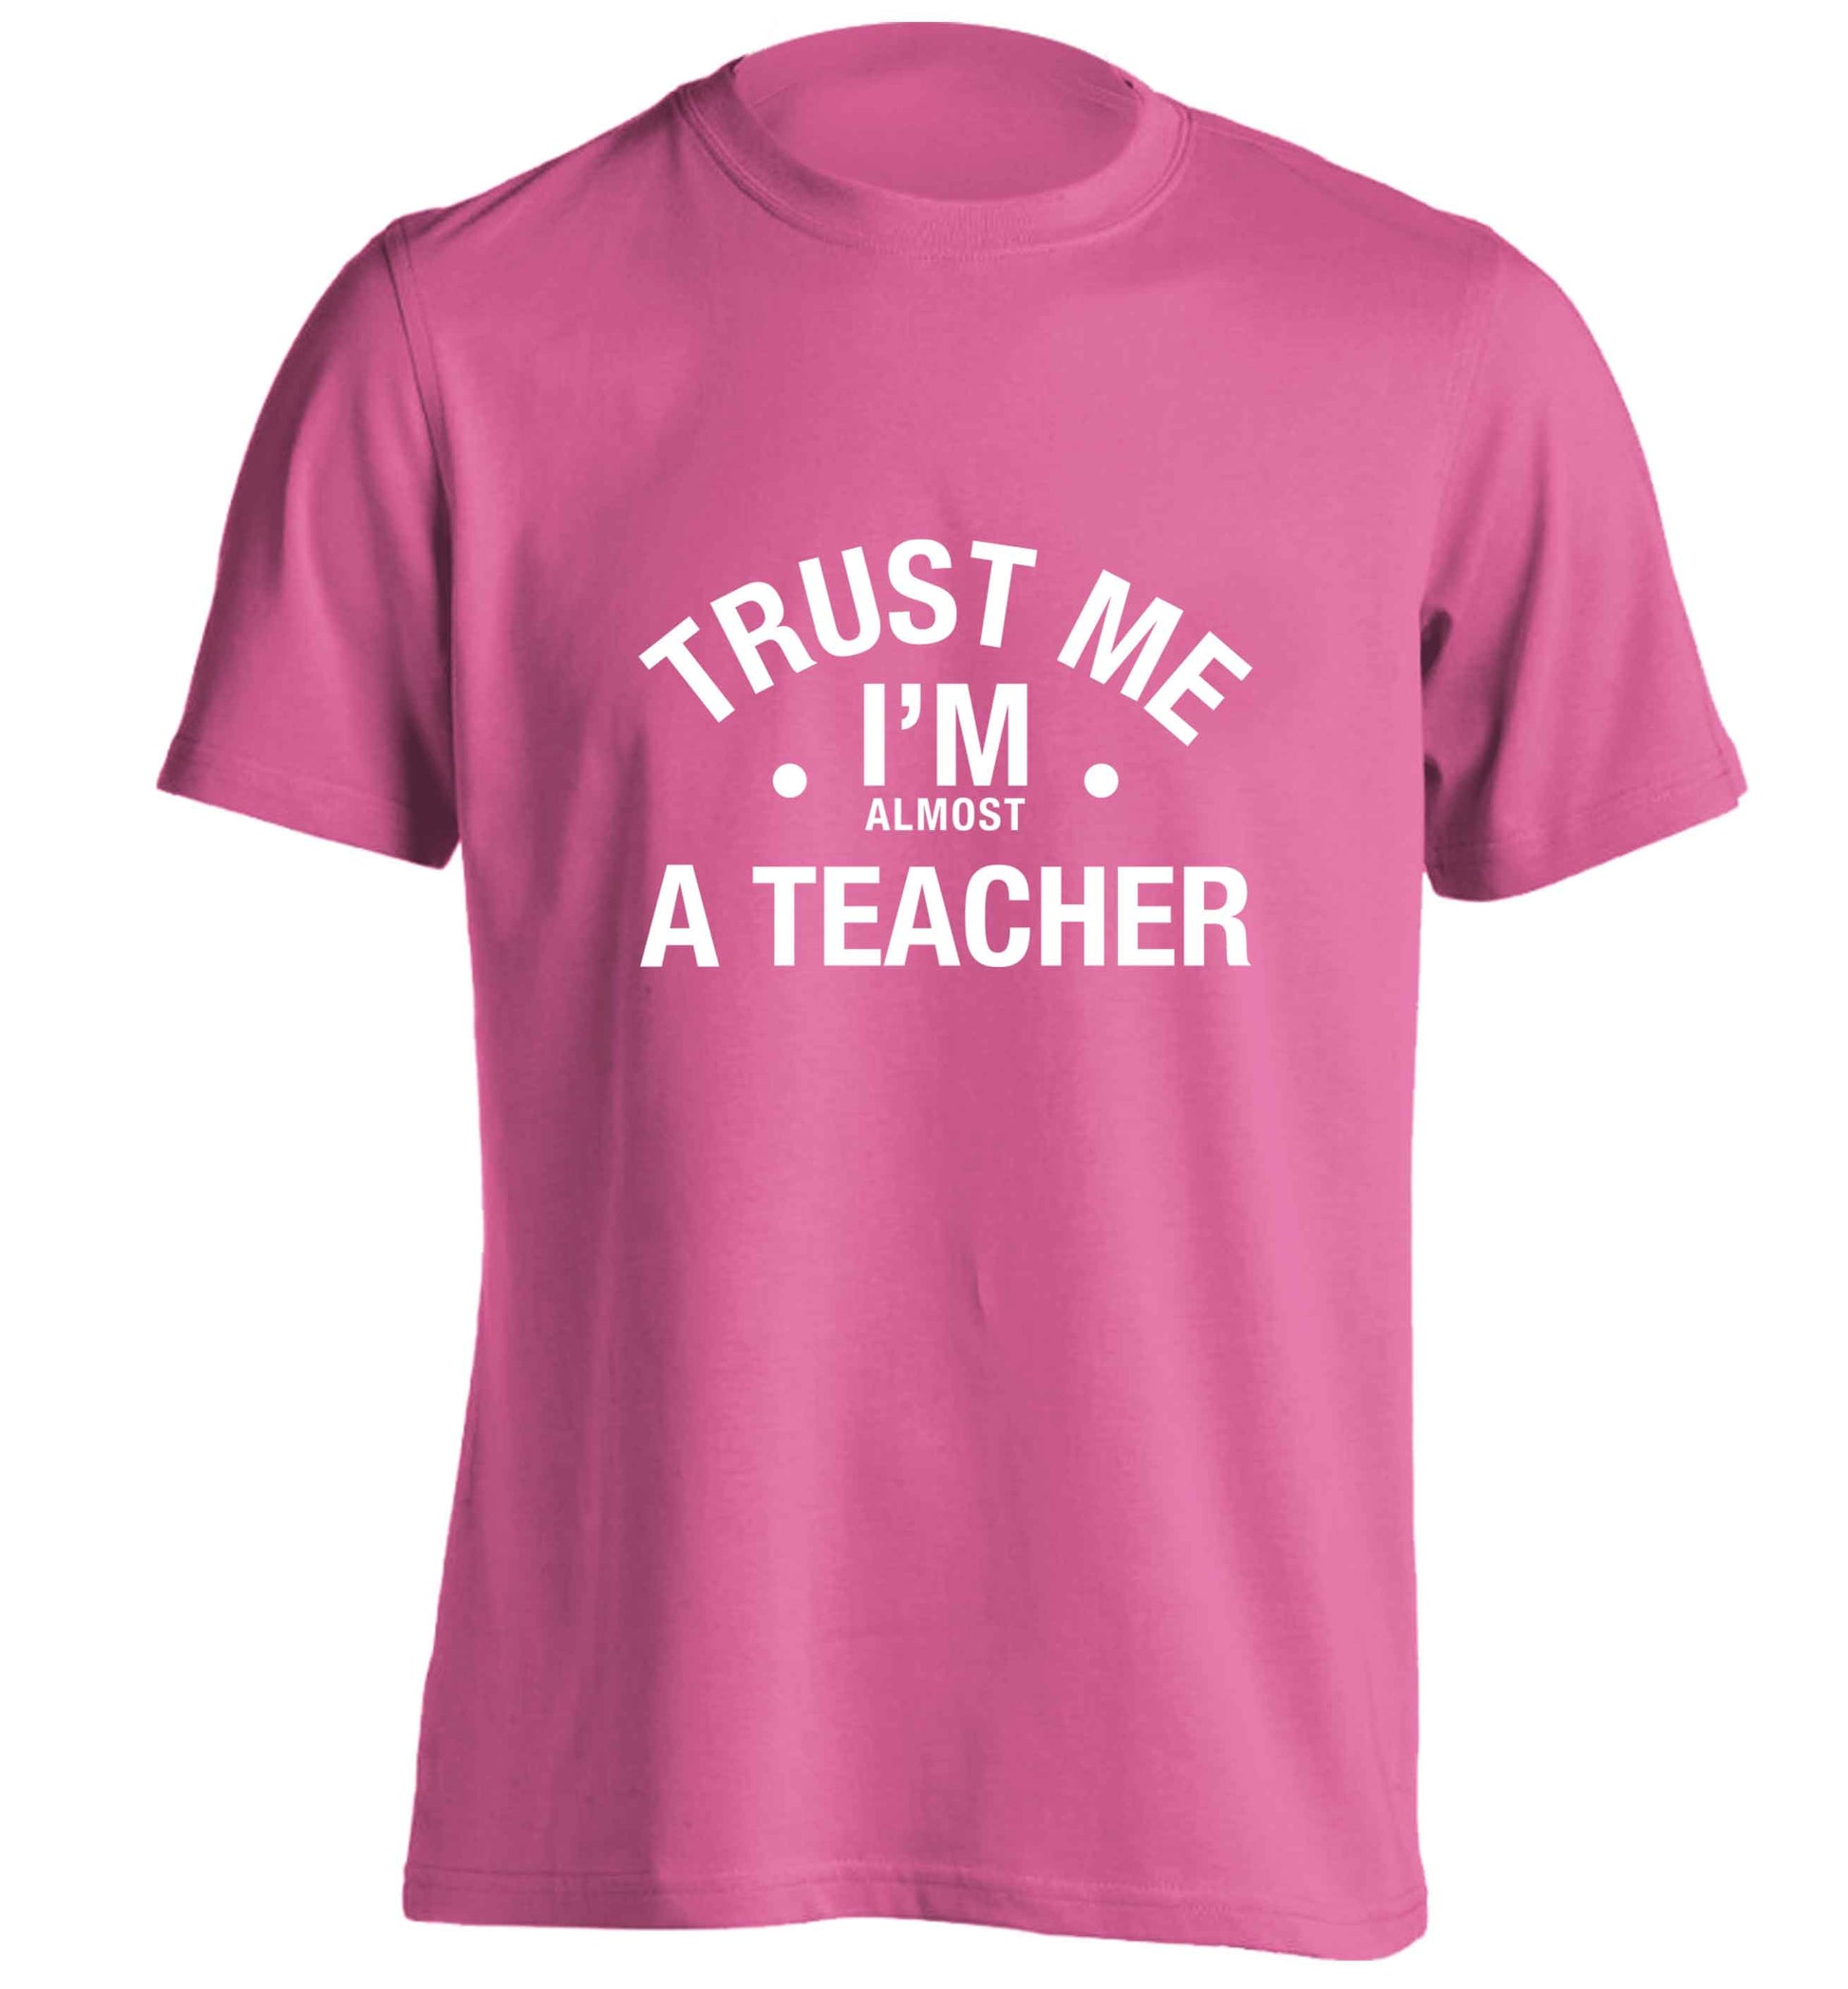 Trust me I'm almost a teacher adults unisex pink Tshirt 2XL